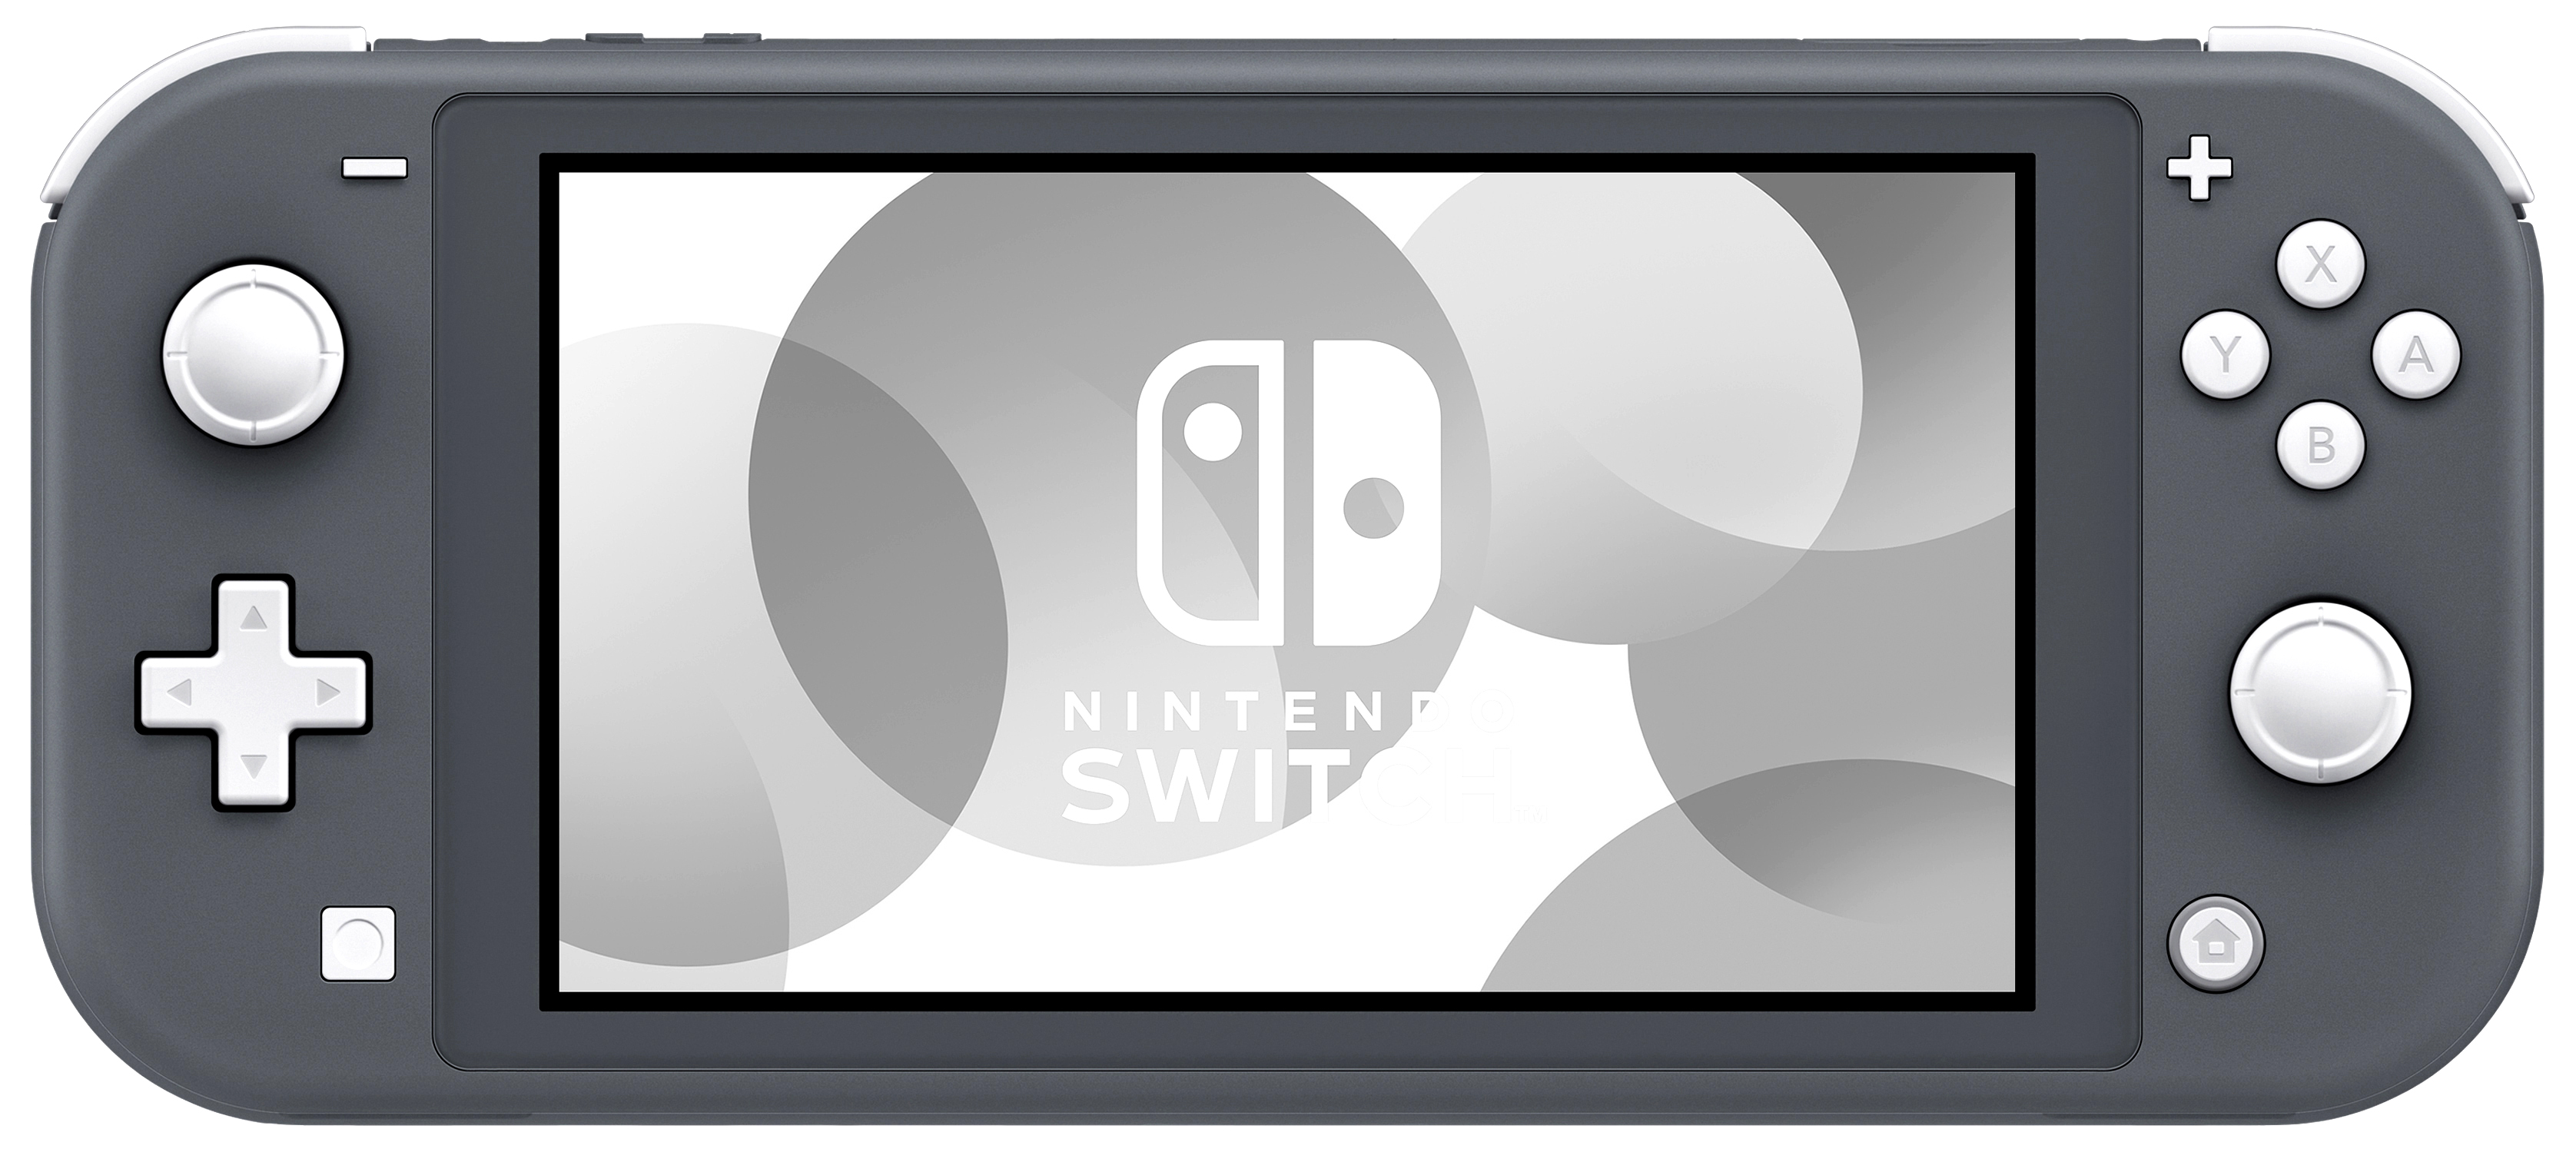 Приставка nintendo switch lite. Игровая консоль Nintendo Switch Lite. Игровая приставка Nintendo Switch Lite 32 ГБ. Nintendo Switch Lite (серый). Игровая приставка Nintendo Switch Lite бирюзовый.